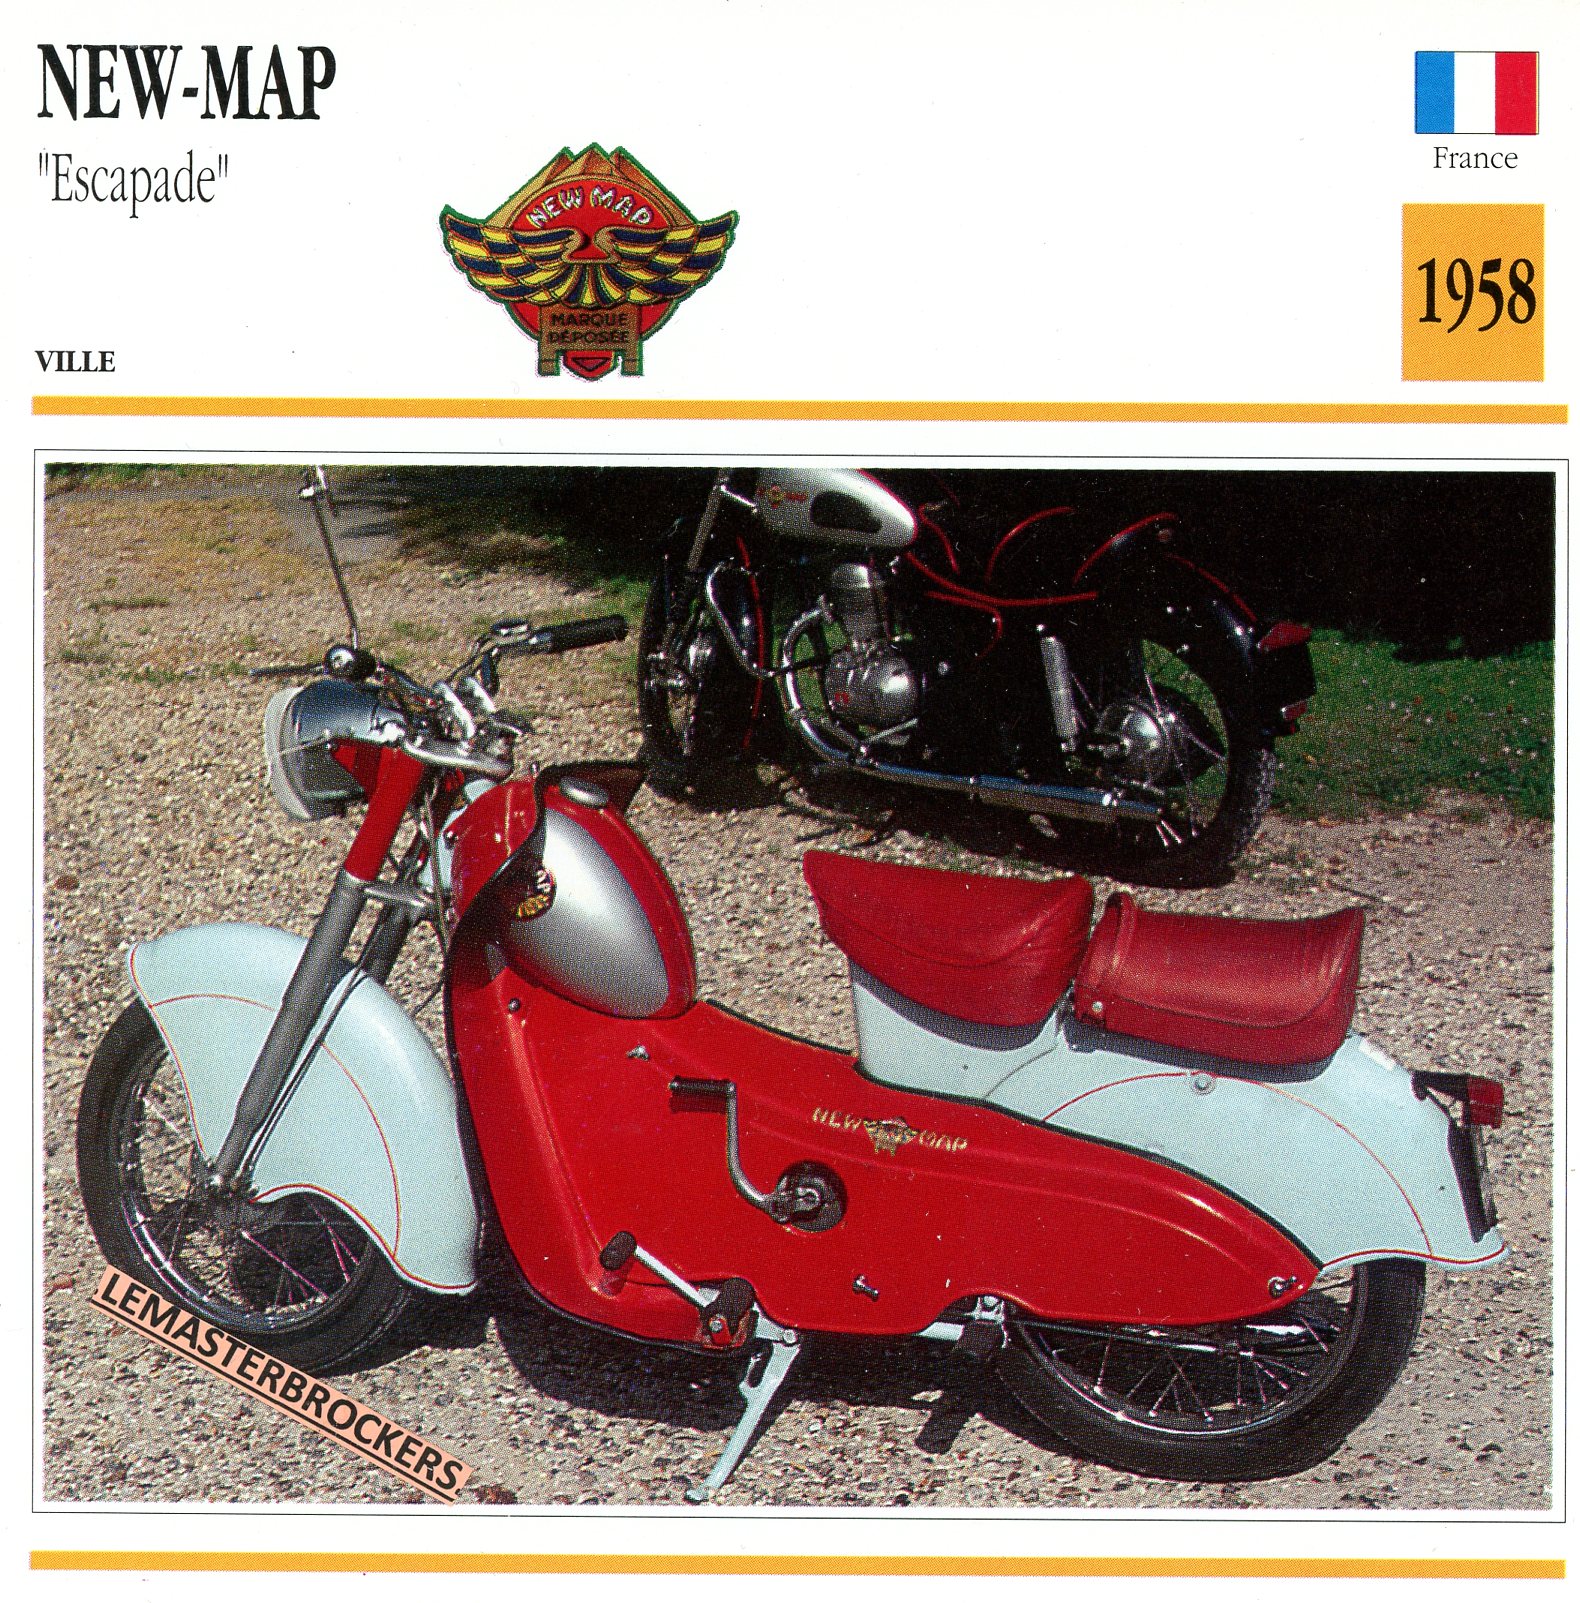 new-mpa-escapade-1958-newmap-fiche-moto-atlas-lemasterbrockers-card-motorcycle.jpeg